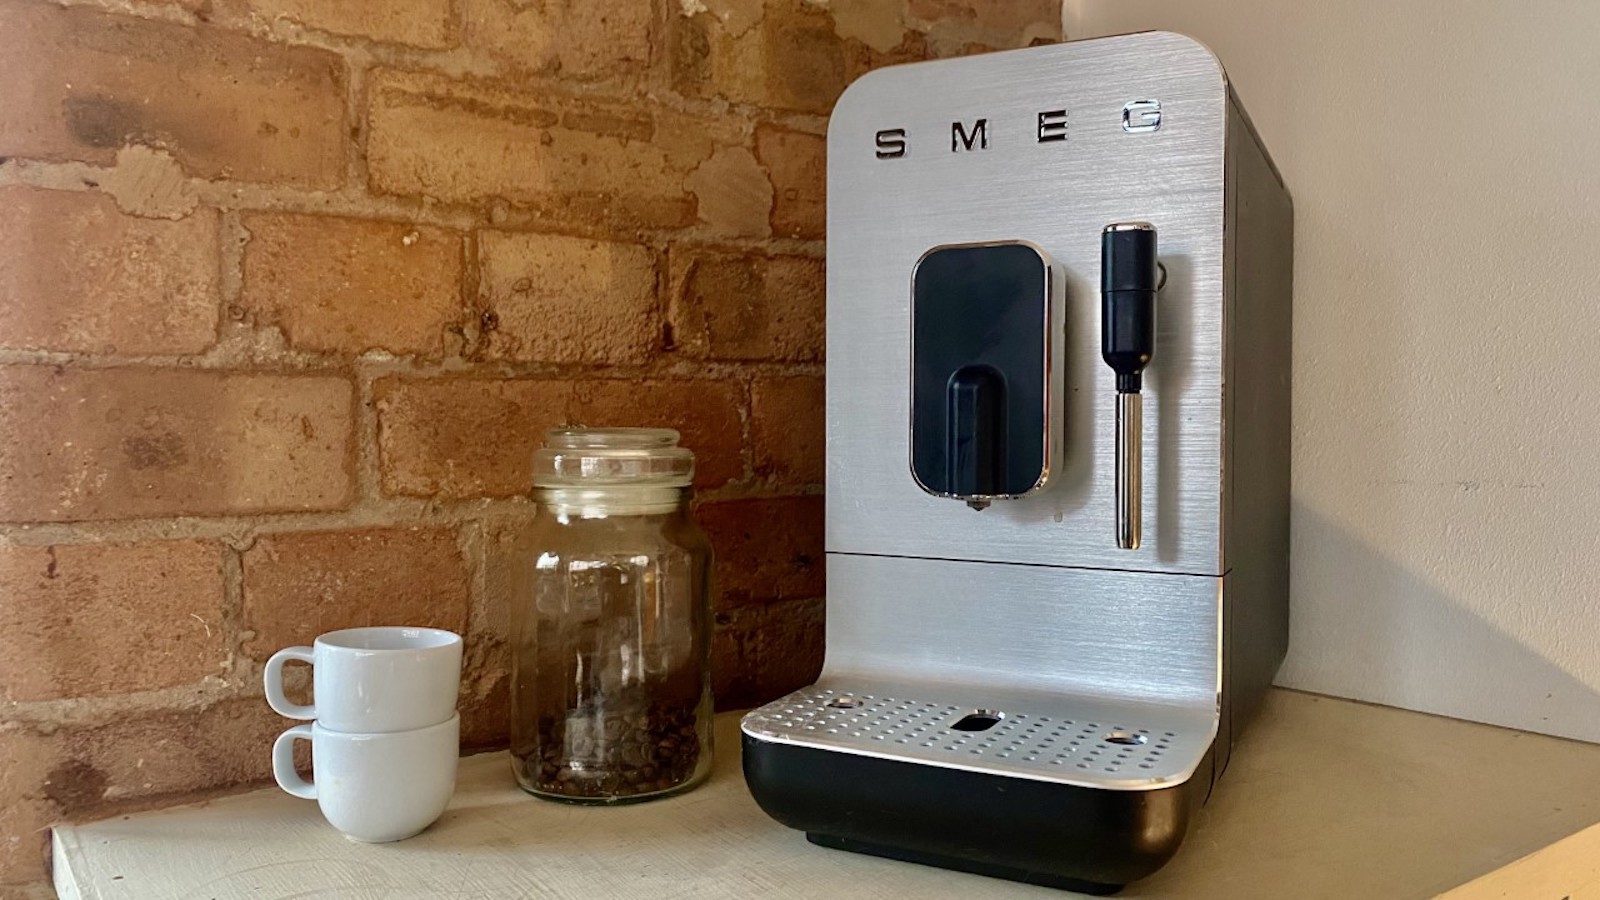  Smeg coffee machine - Best looking bean-to-cup machine